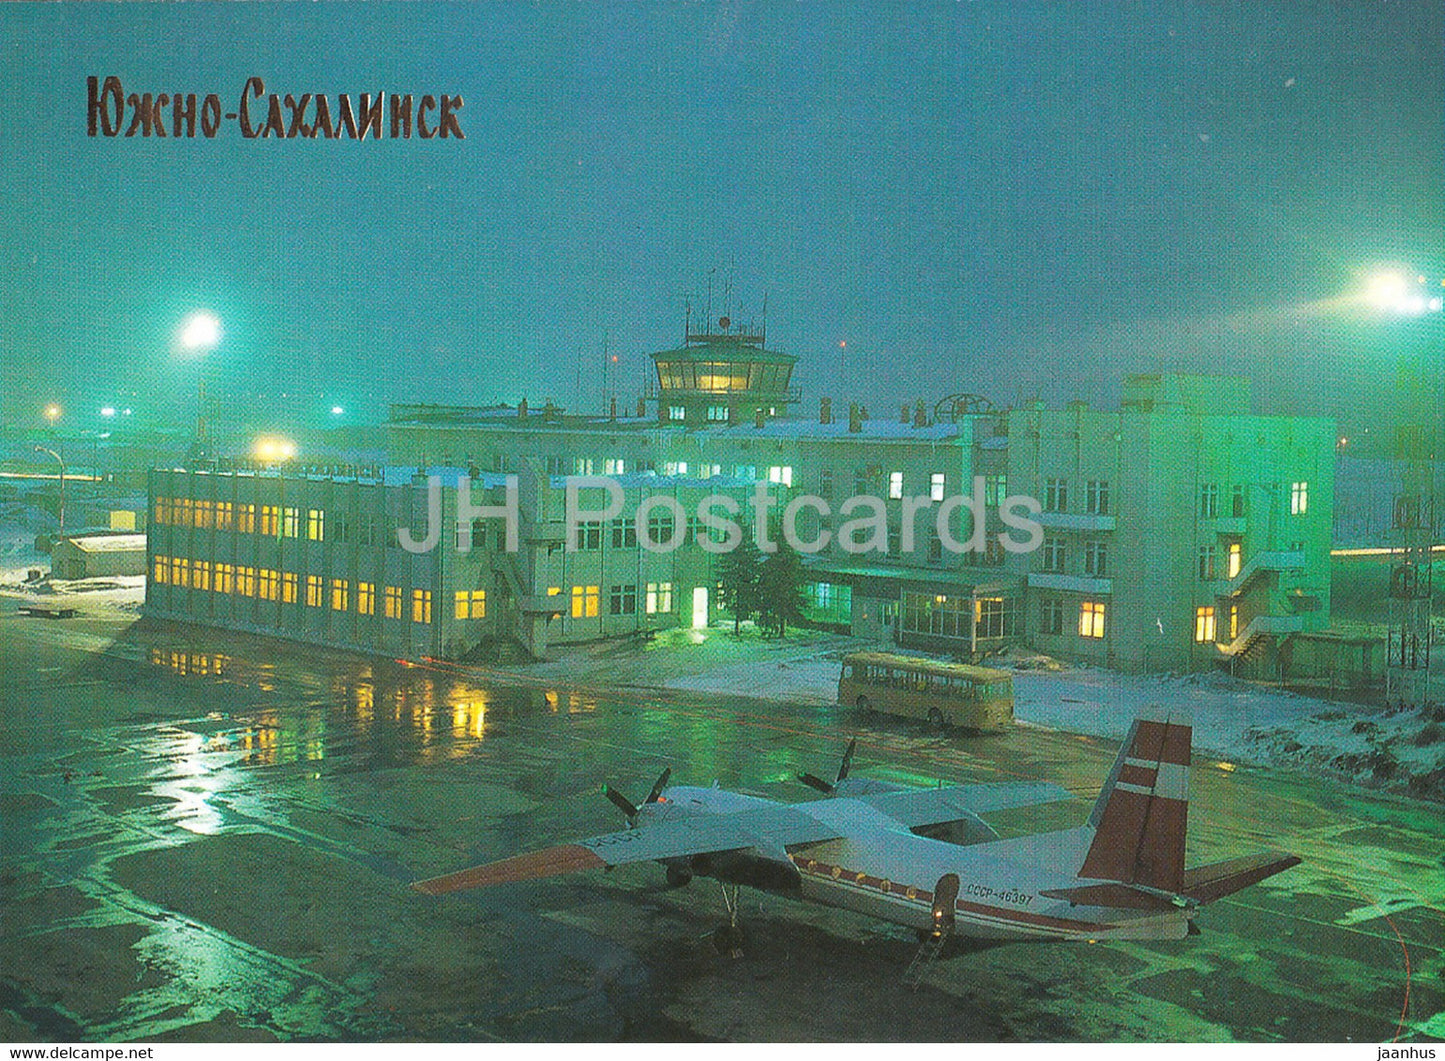 Yuzhno-Sakhalinsk - Airport Terminal - airplane - bus - 1990 - Russia USSR - unused - JH Postcards